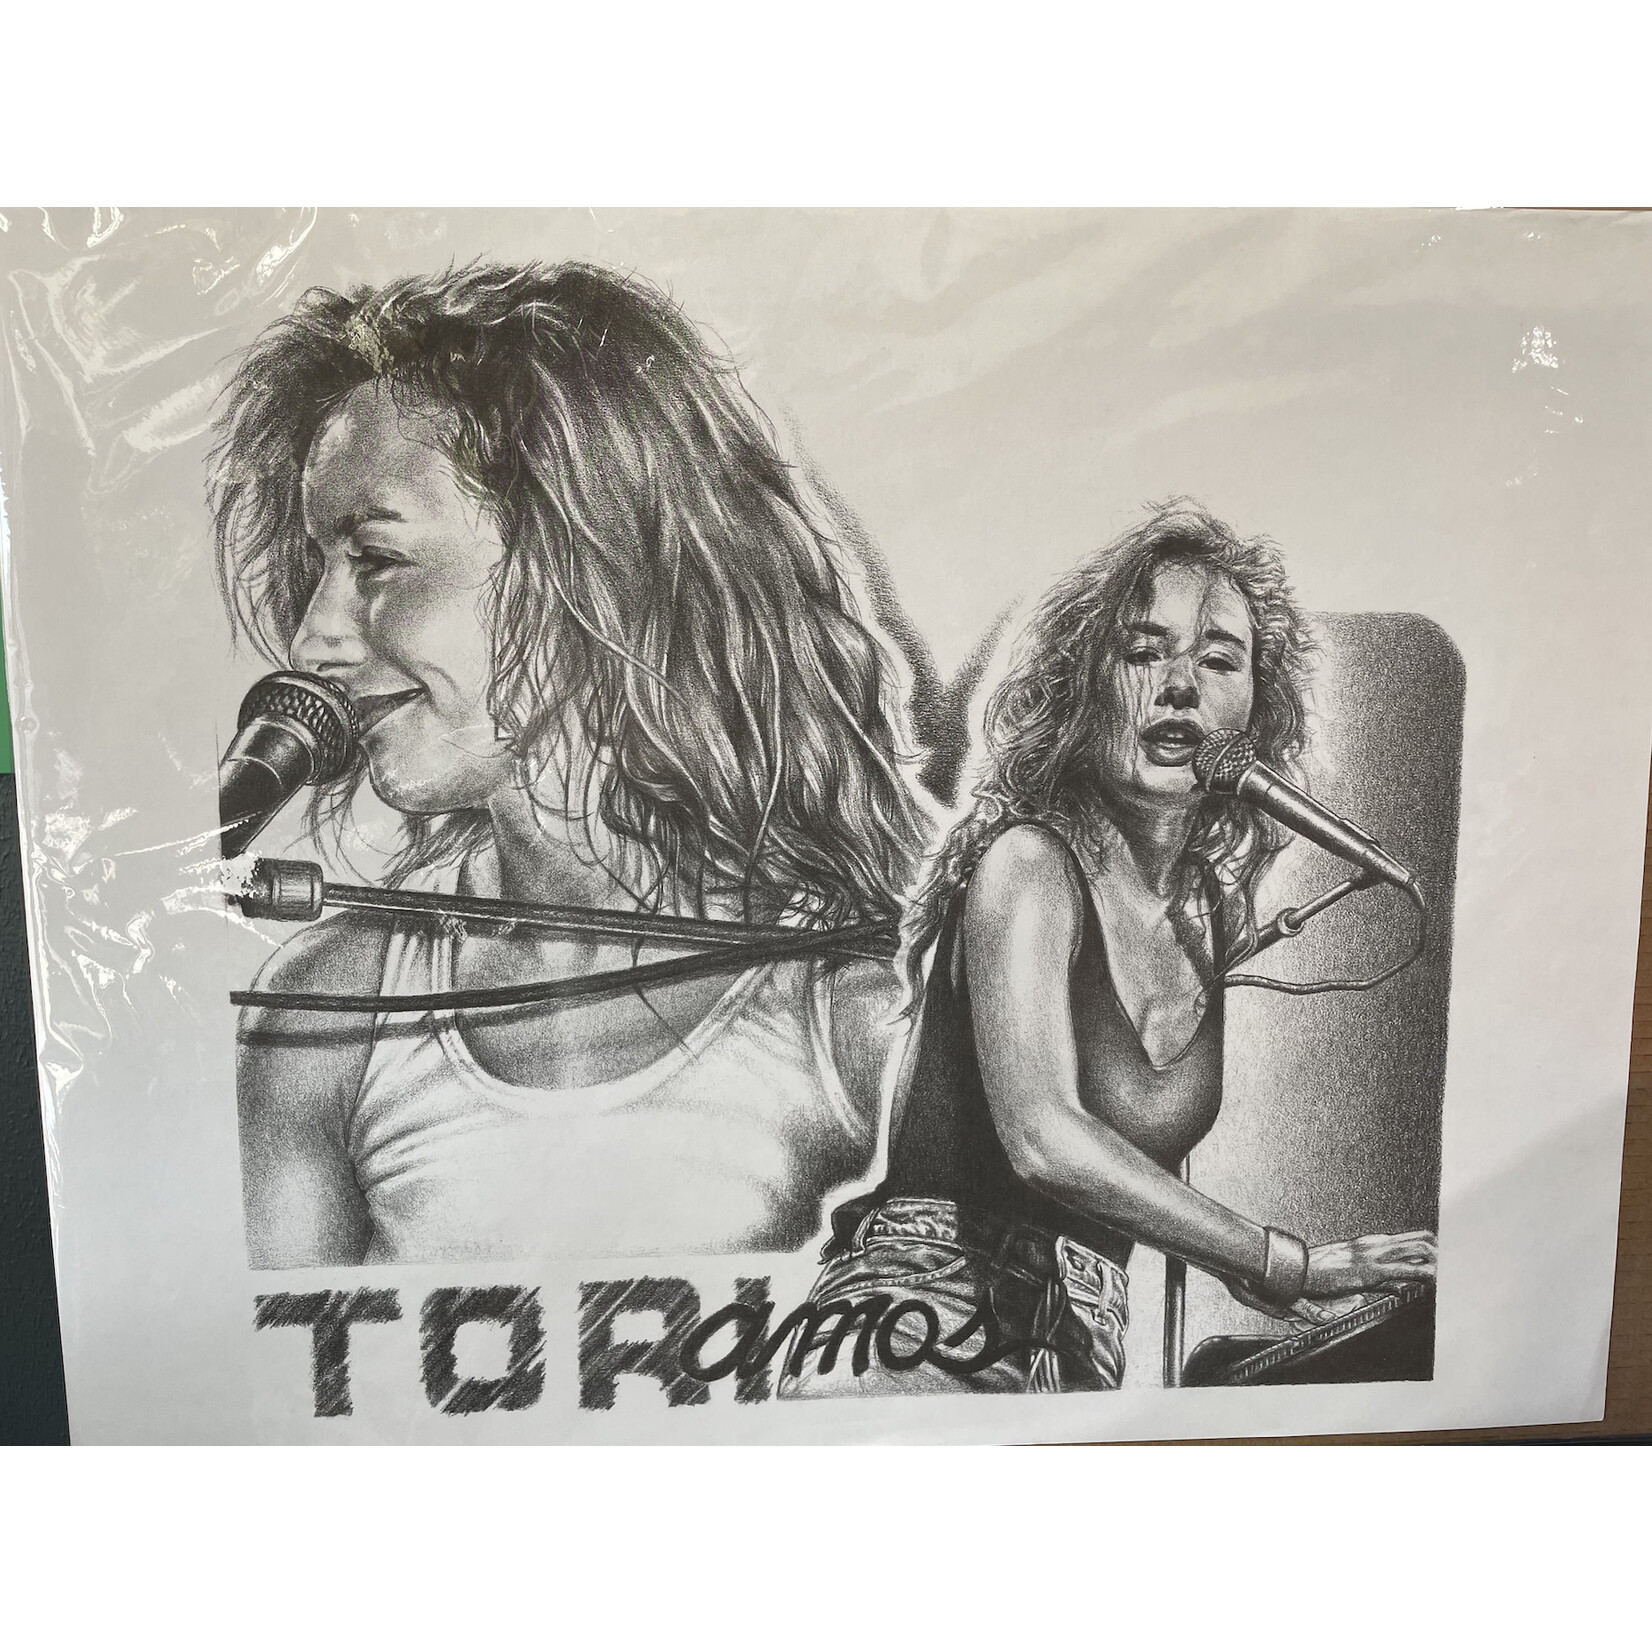 Rock Your Walls Off Tori Amos (Poster) [18"x24"]